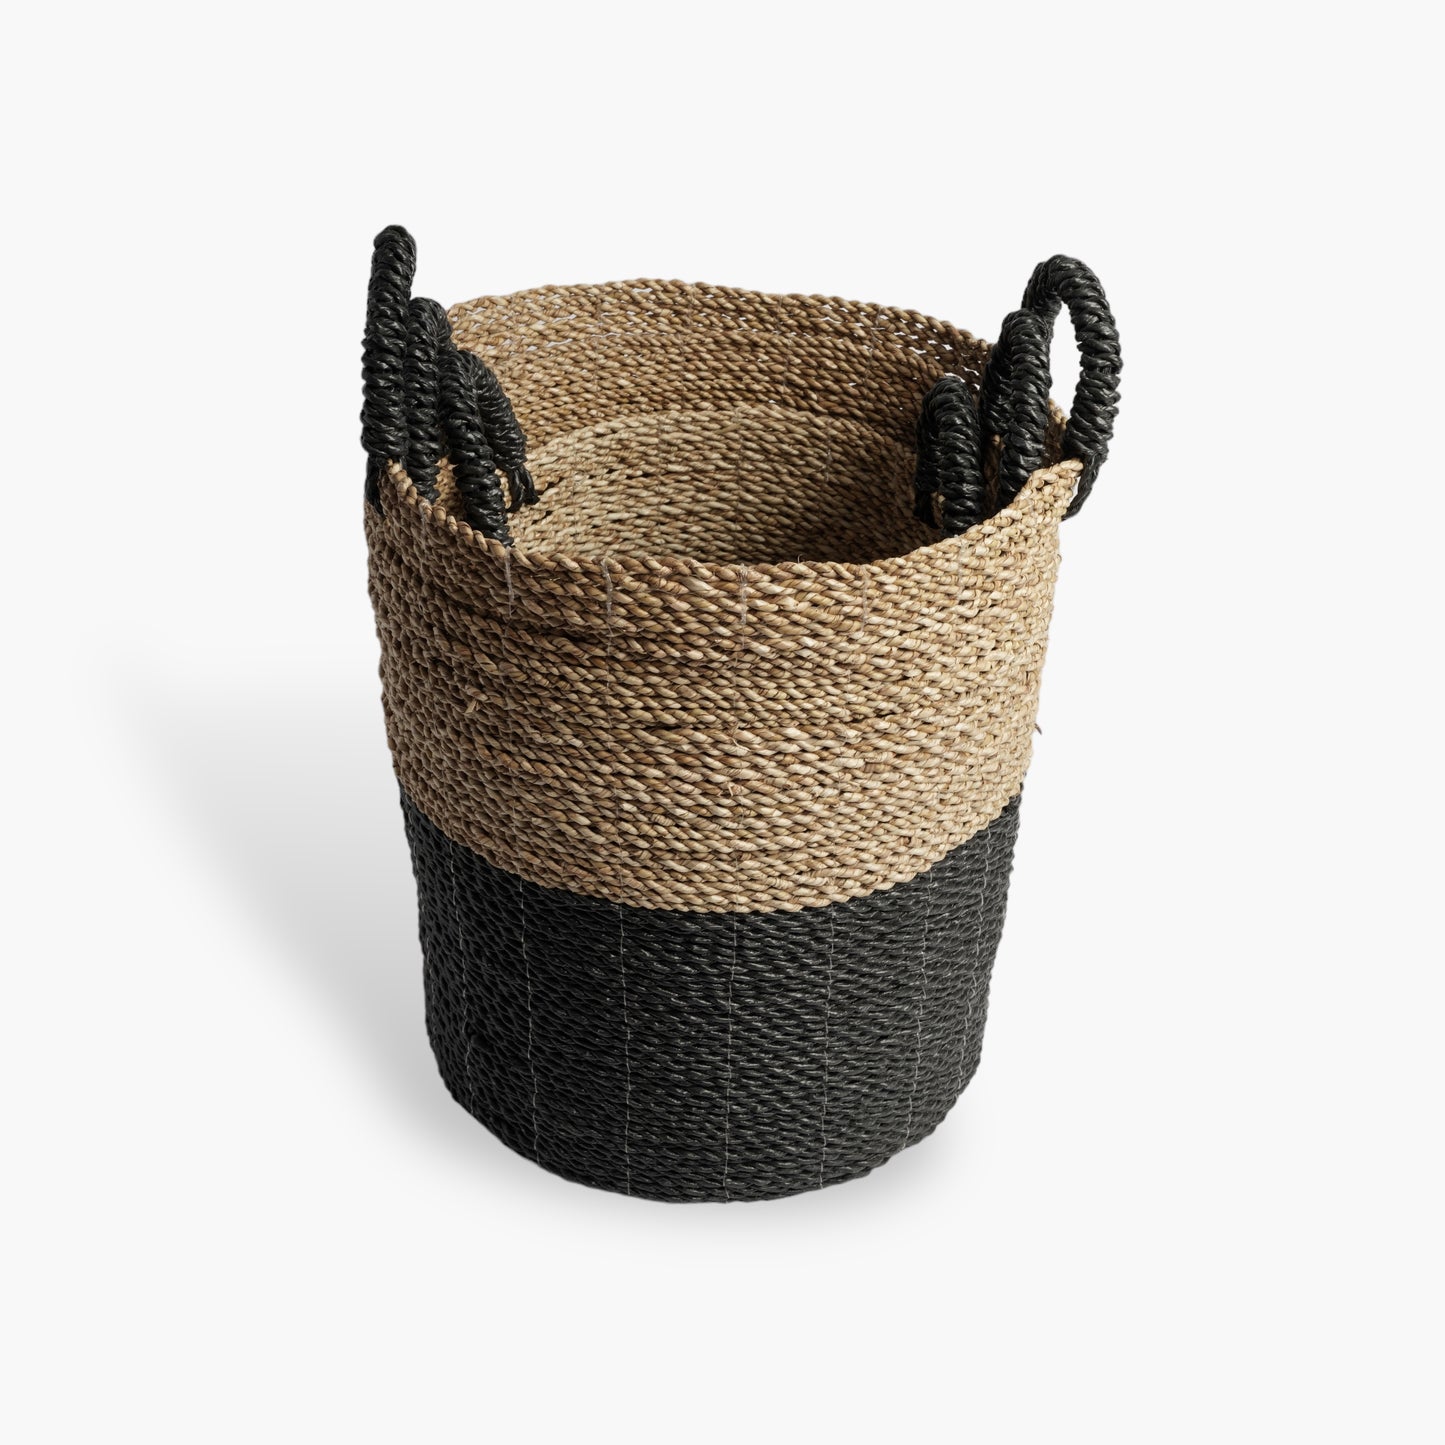 Tropic Twine Basket